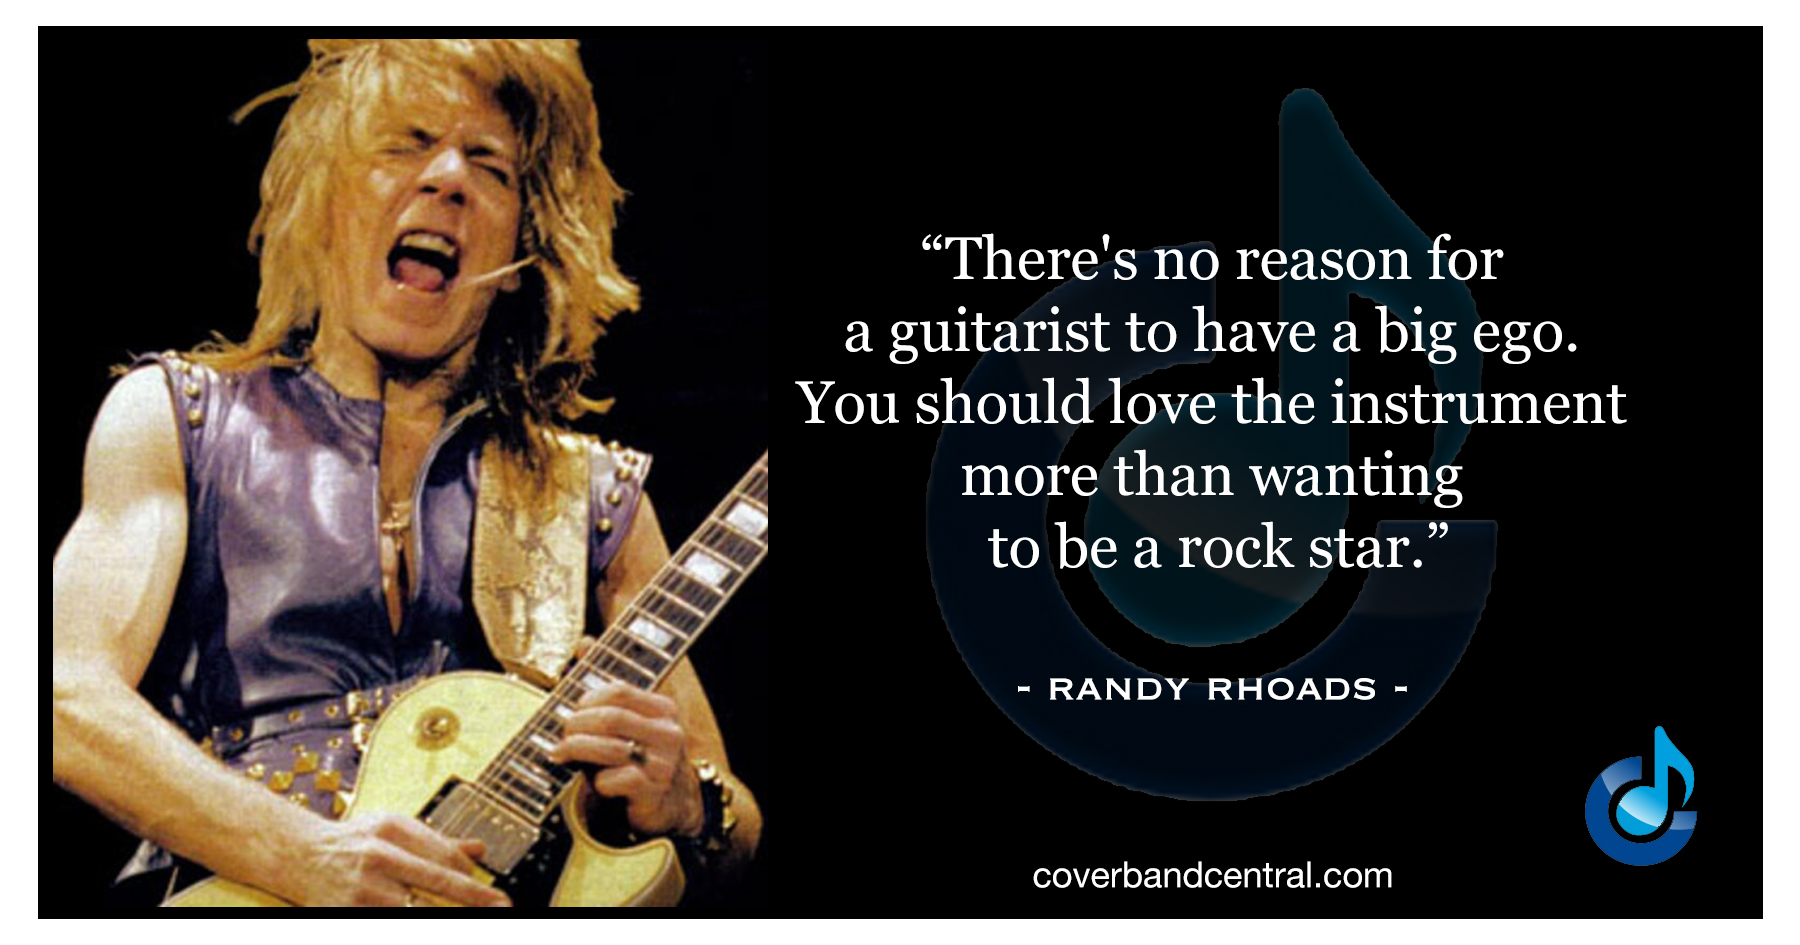 Randy Rhoads quote